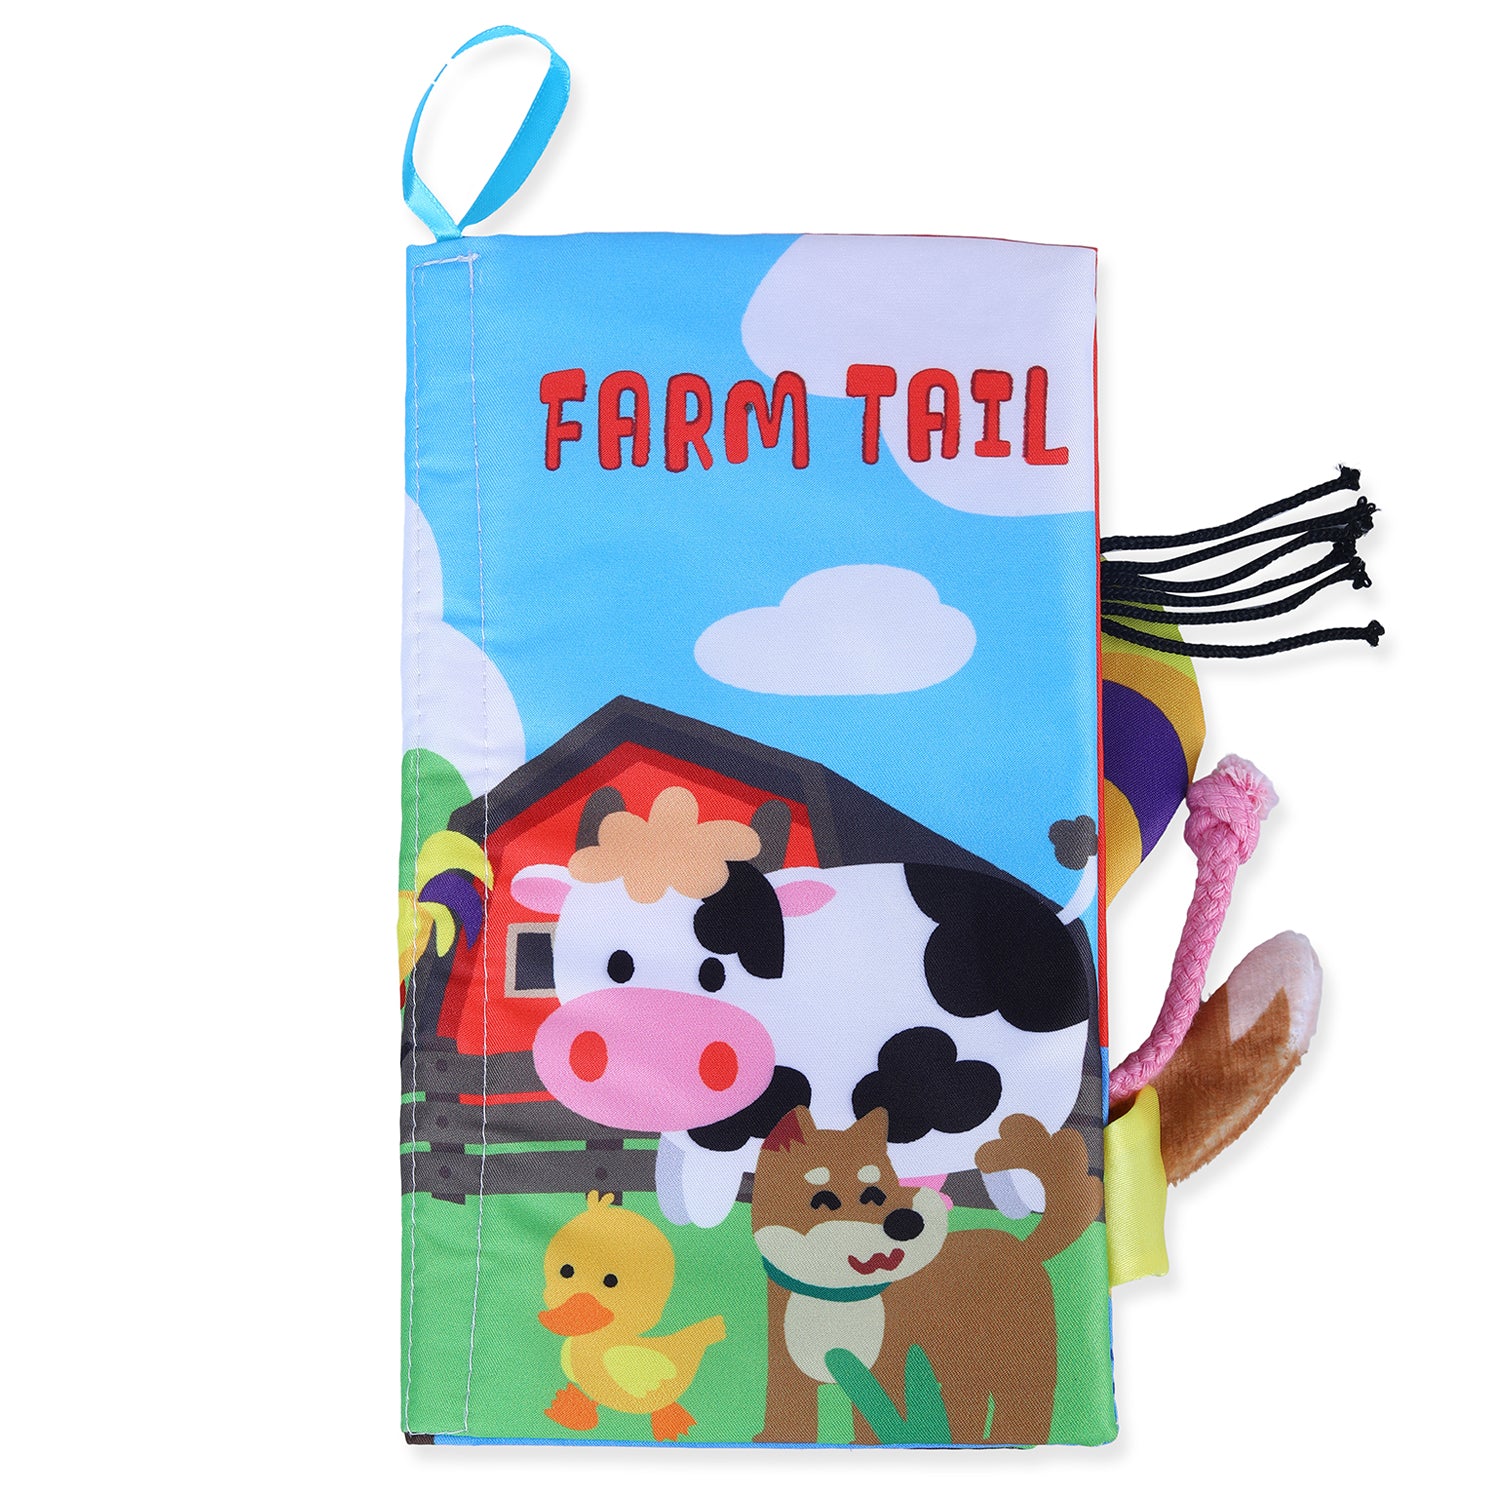 Farm Tail Early Children Sensory Development Interactive 3D Cloth Book With Rustle Paper - Multicolour